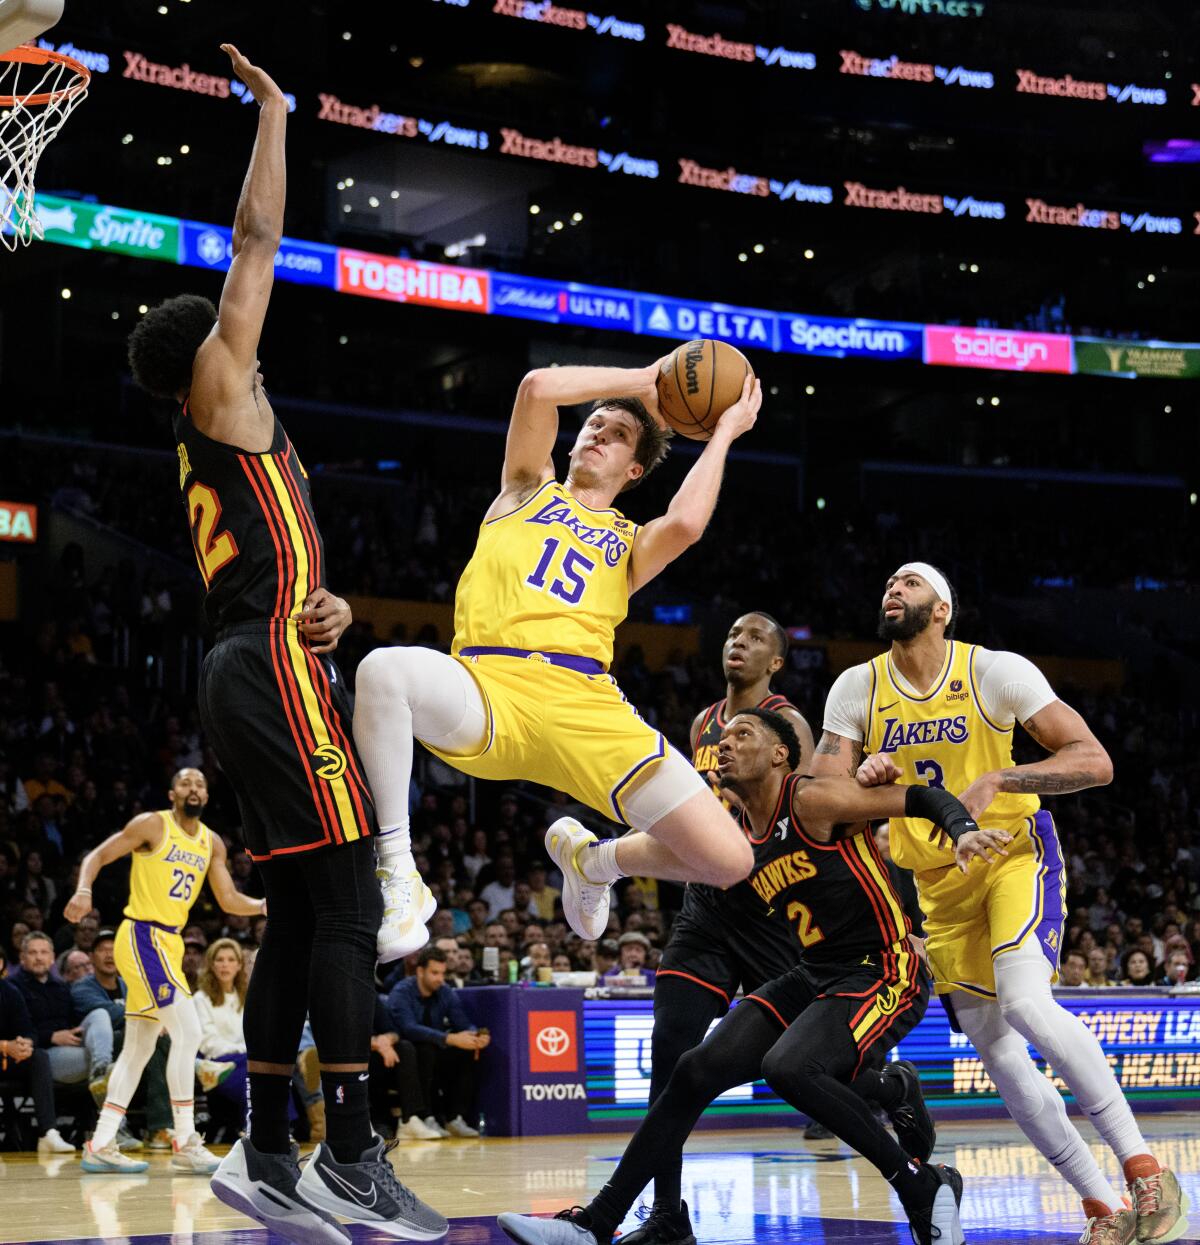 Lakers guard Austin Reaves makes a midair pass in front of Atlanta Hawks forward De'Andre Hunter.